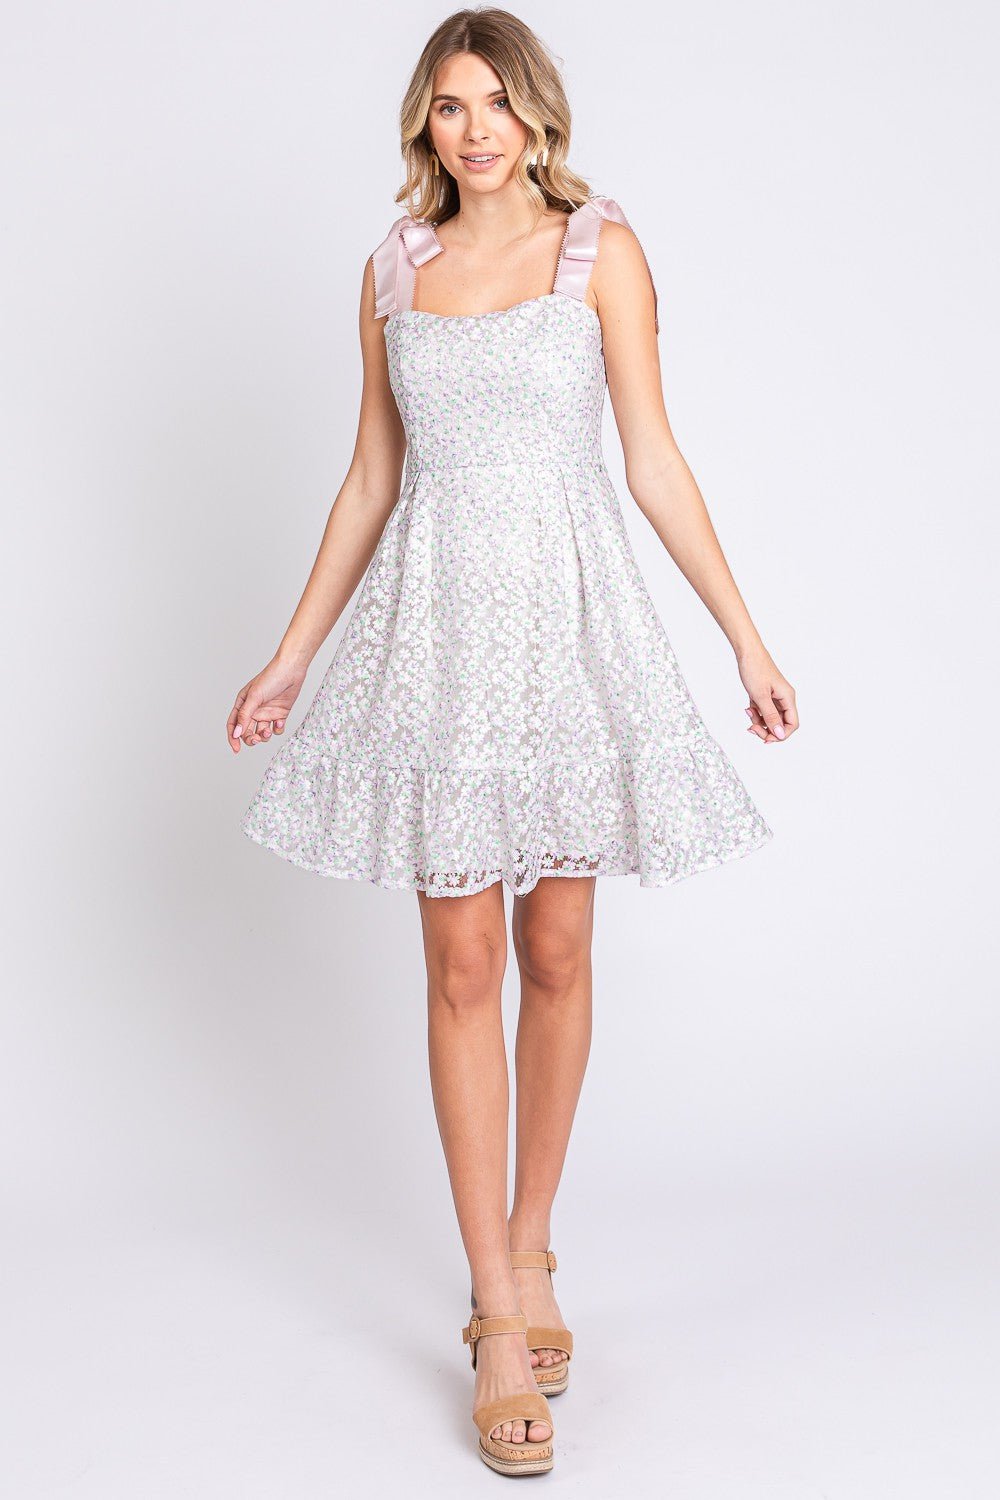 Tulle Floral Sleeveless Mini Dress in Lavender/MintMini DressGeeGee